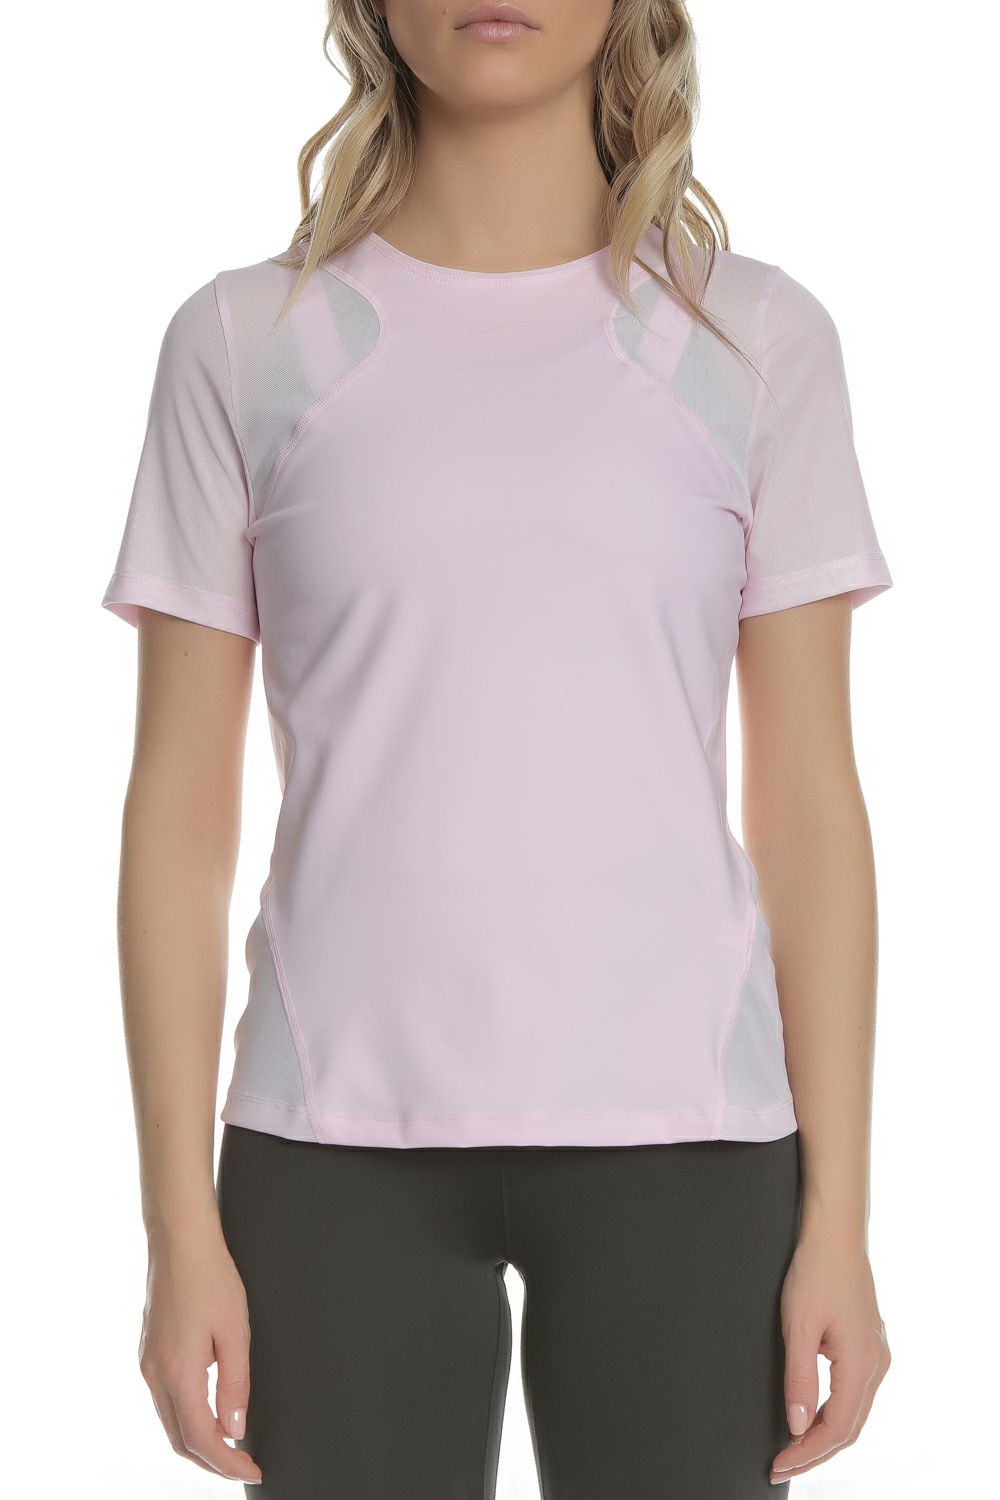 NIKE - Γυναικεία μπλούζα NIKE Pro HyperCool ροζ Γυναικεία/Ρούχα/Αθλητικά/T-shirt-Τοπ